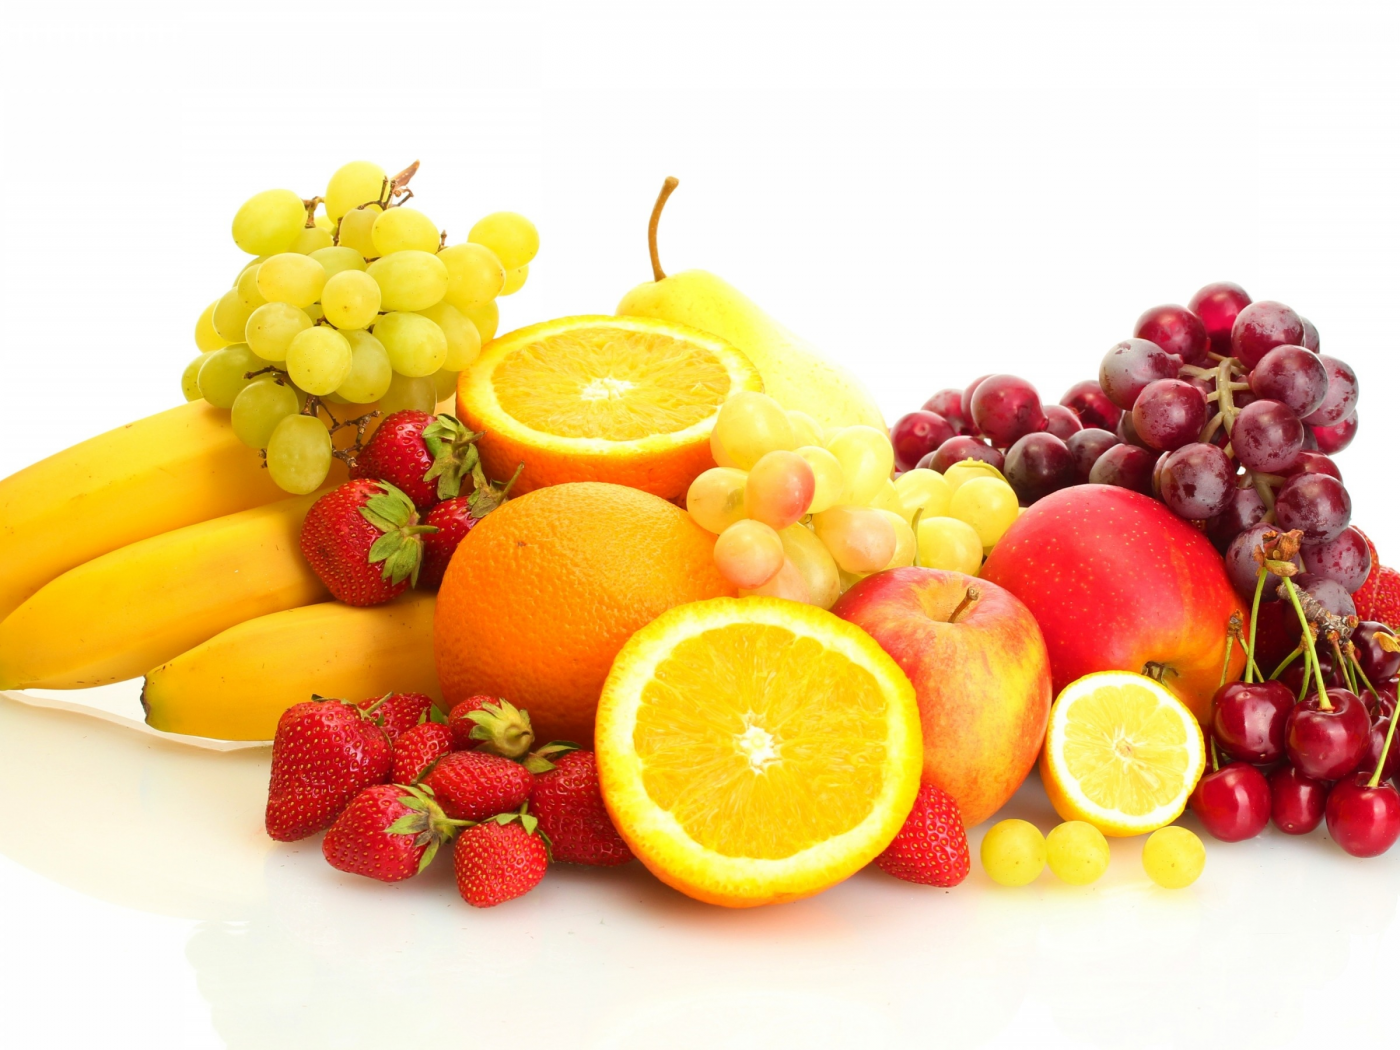 strawberry, apples, cherry, ягоды, berries, апельсины, виноград, lemon, клубника, grapes, лимон, oranges, fruits, черешня, белый фон, яблоки, фрукты, груша, pear, bananas, бананы